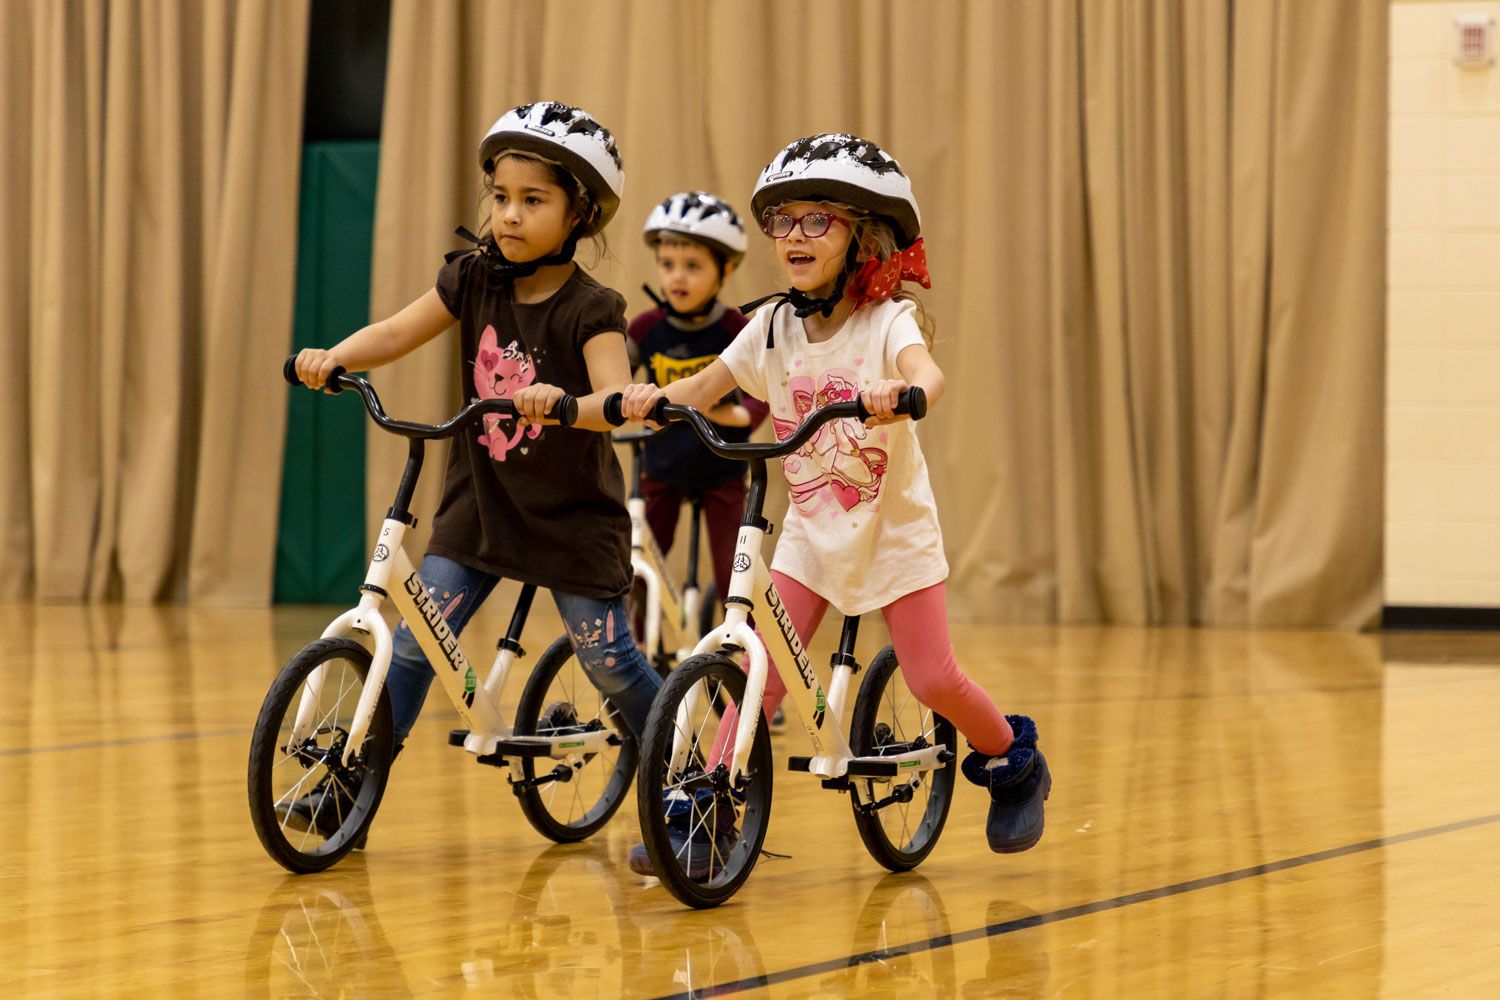 girls ride balance bikes through a school gym